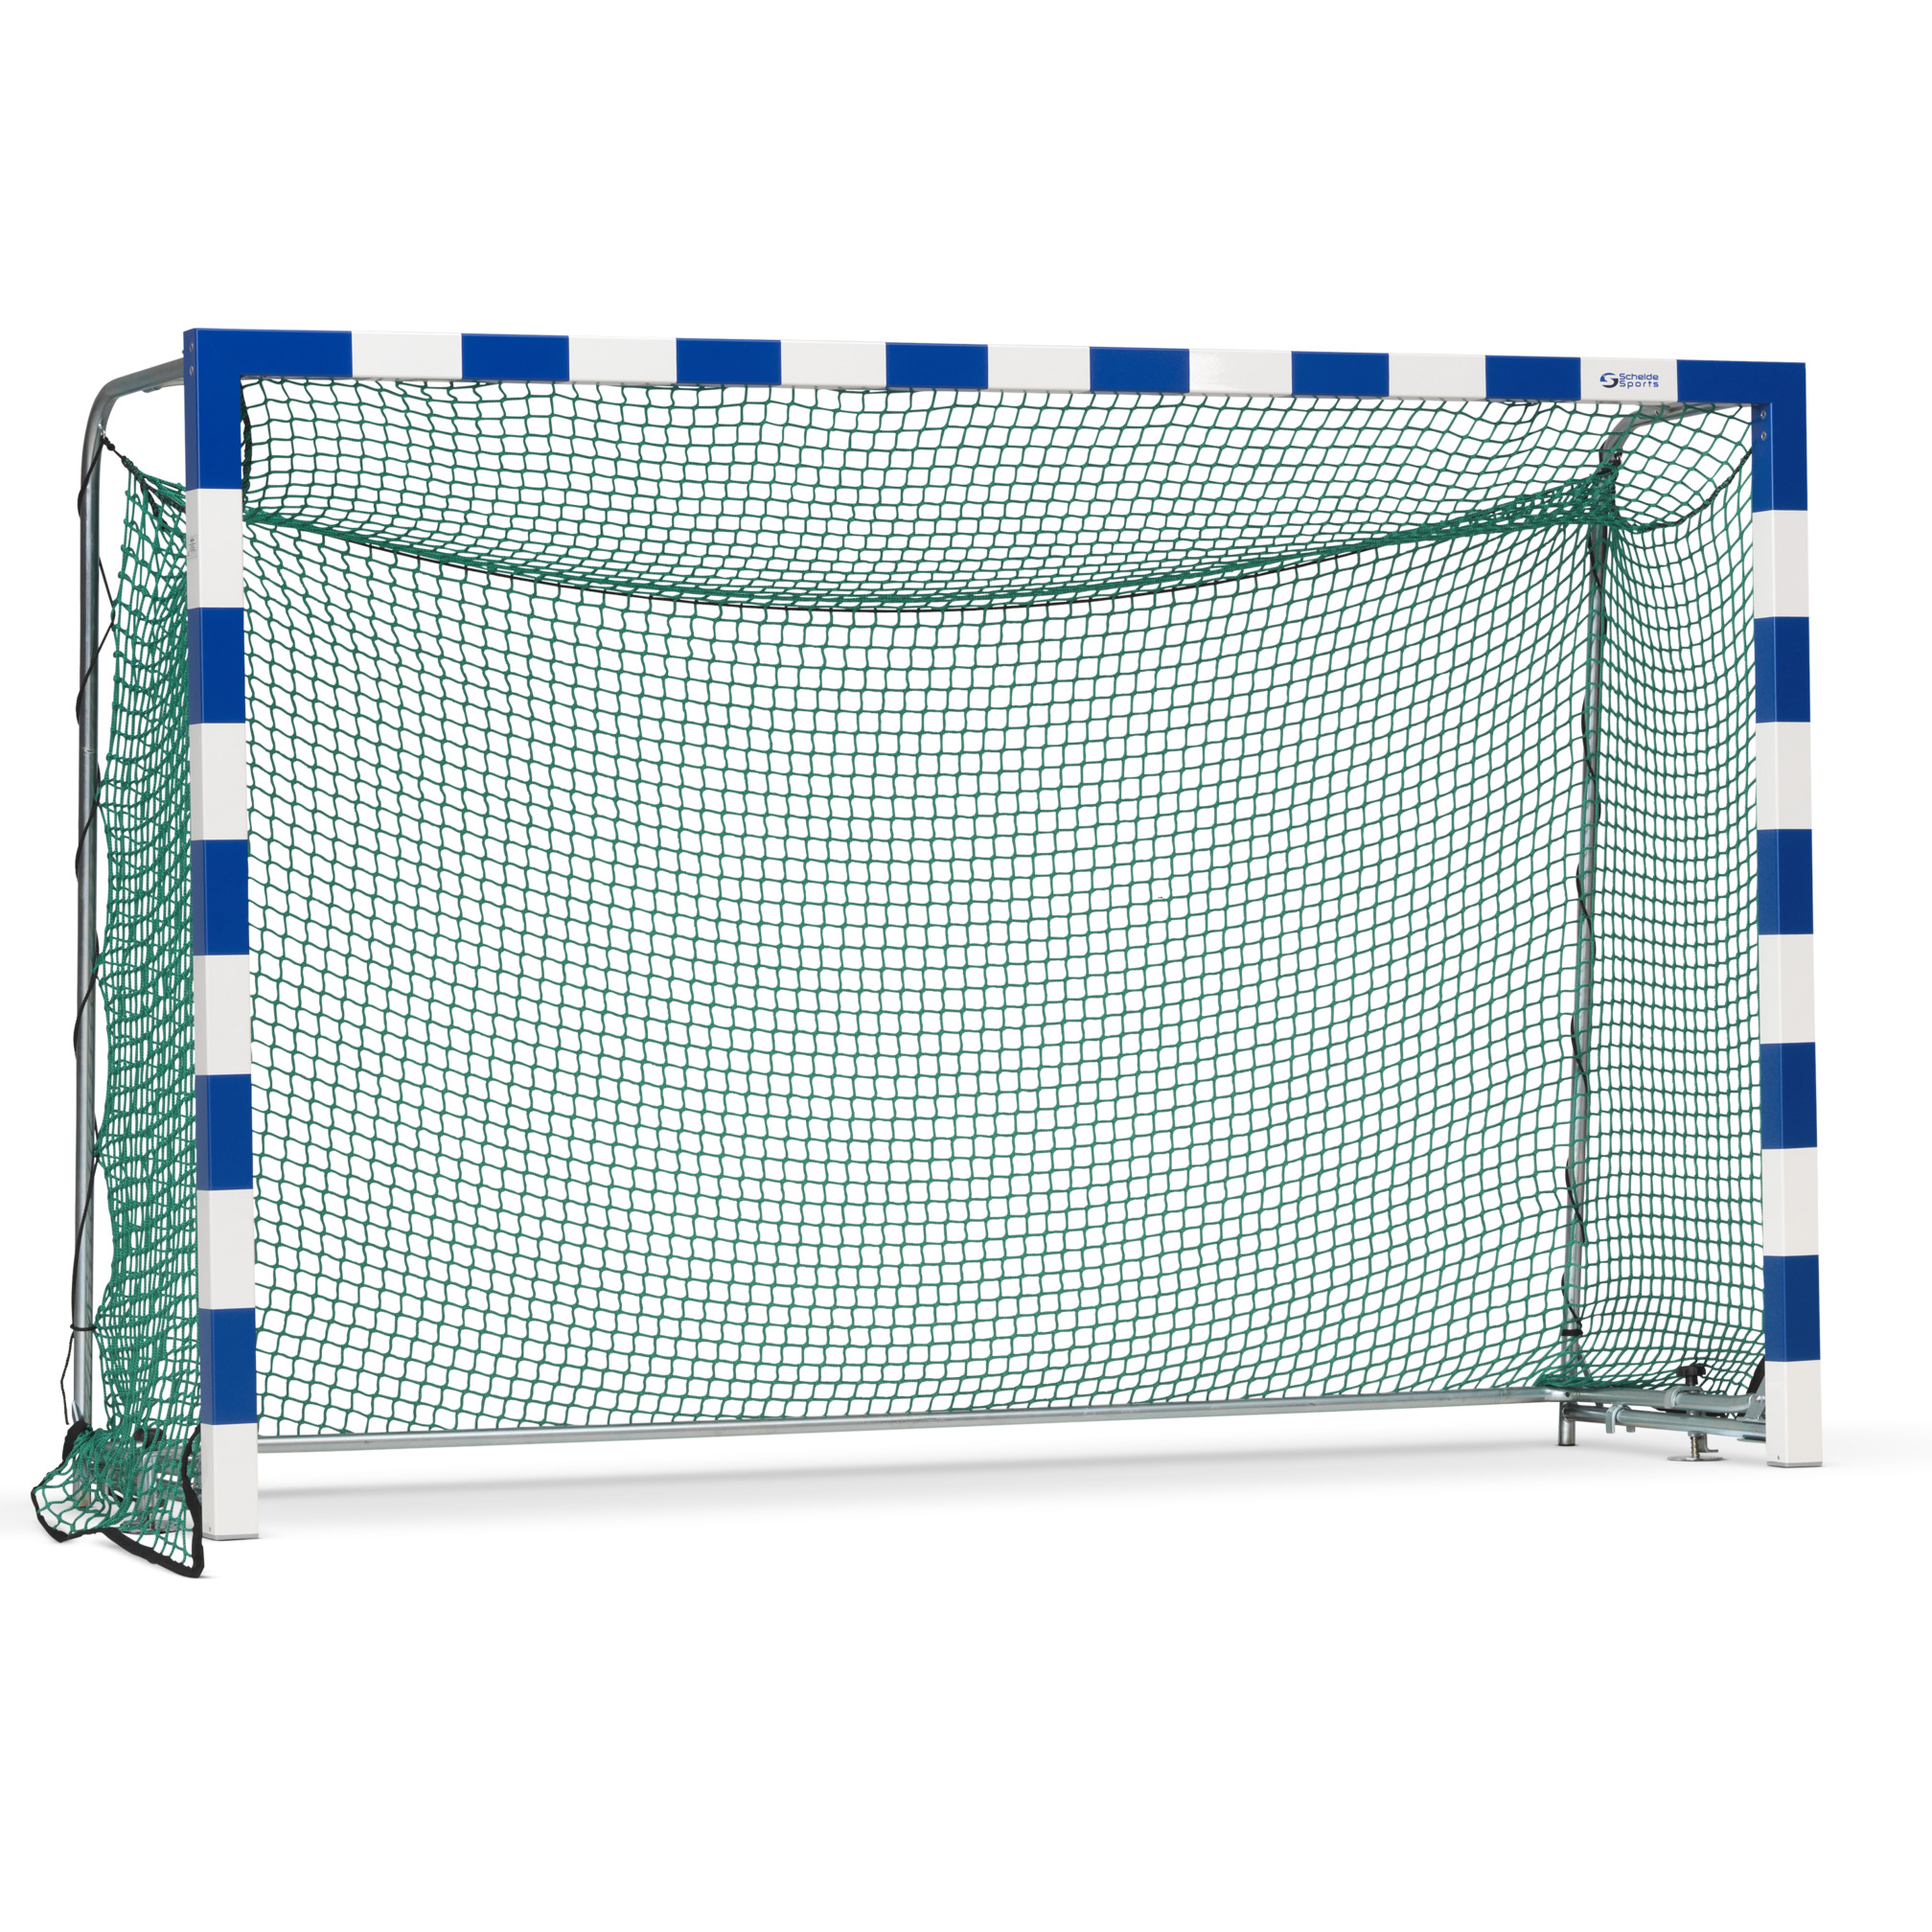 Handball goal (depth 100 cm) with collapsible bracket 